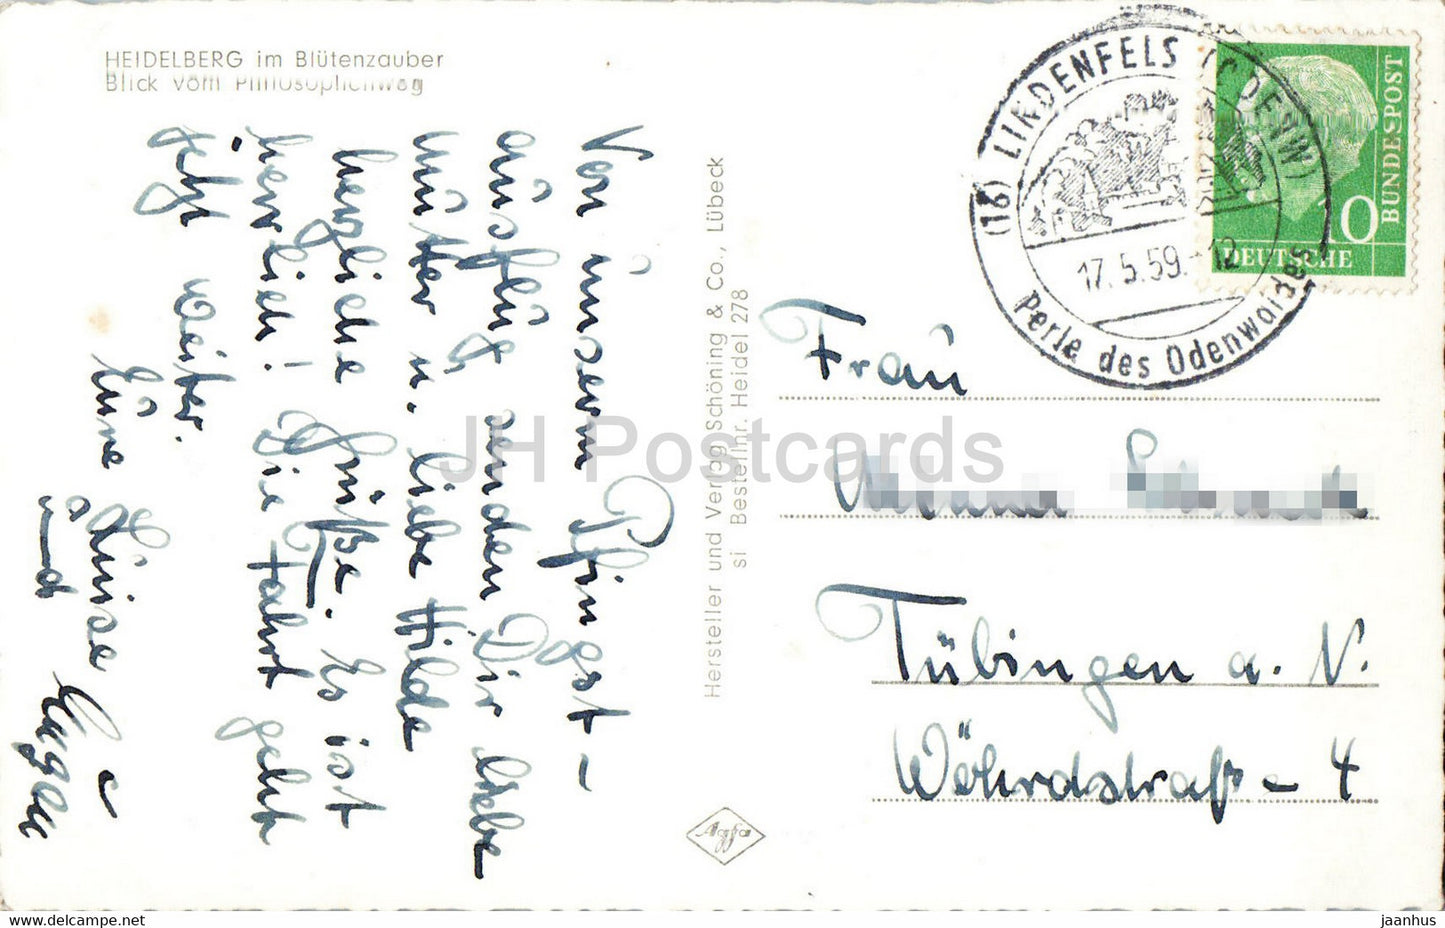 Heidelberg im Blutenzauber - Blick vom Philosophenweg - old postcard - 1959 - Germany - used